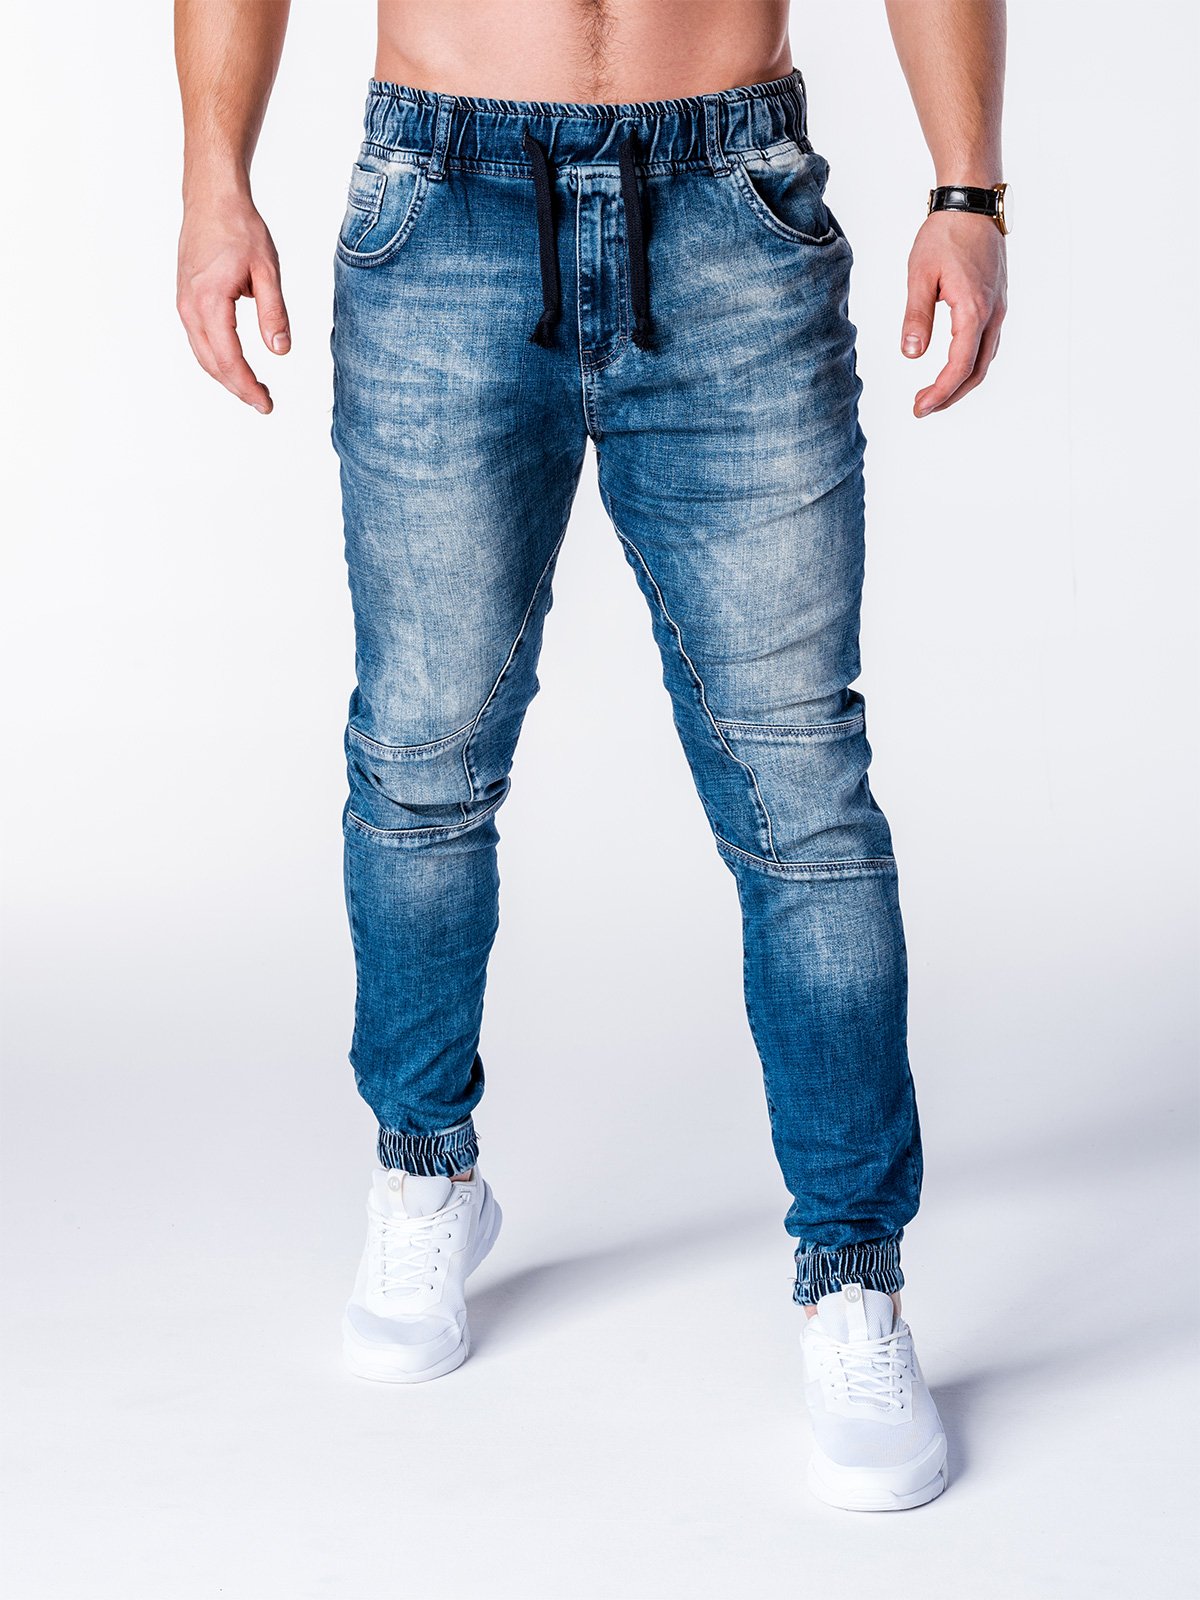 Denim Cargo Jogger Style Jeans Pant For Men  Boys